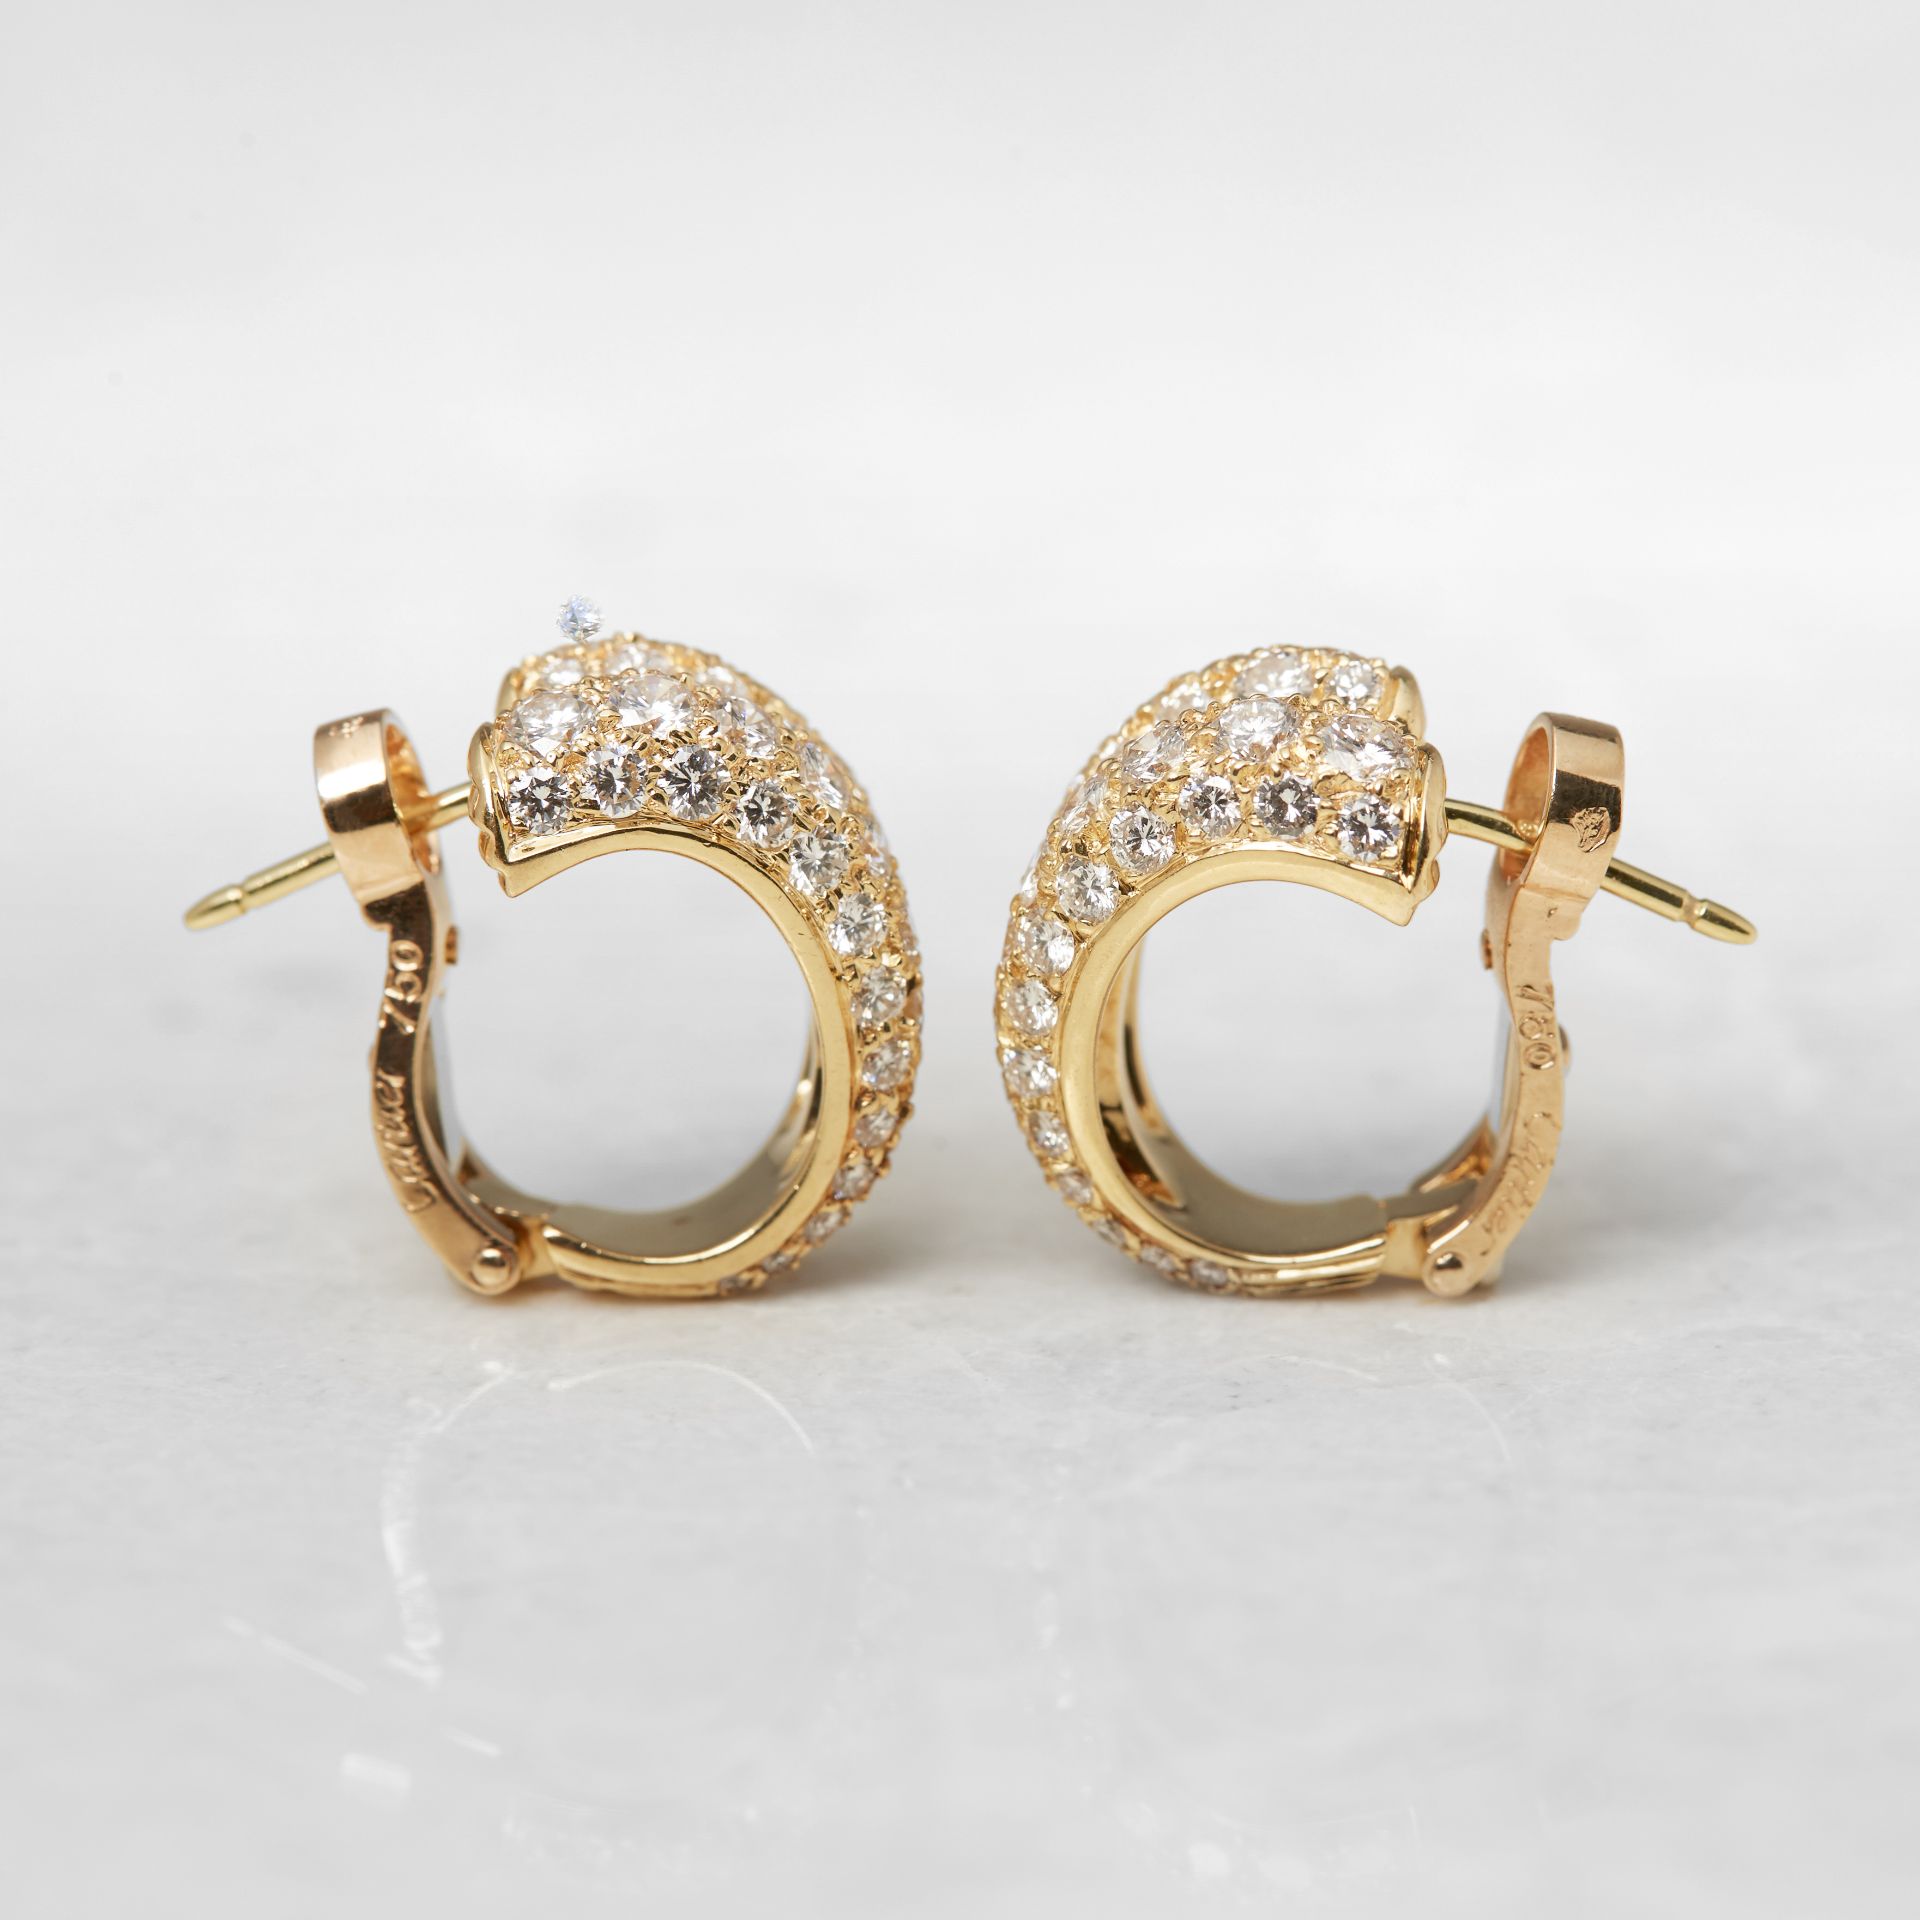 Cartier 18k Yellow Gold Diamond Double Hoop Earrings - Image 6 of 22